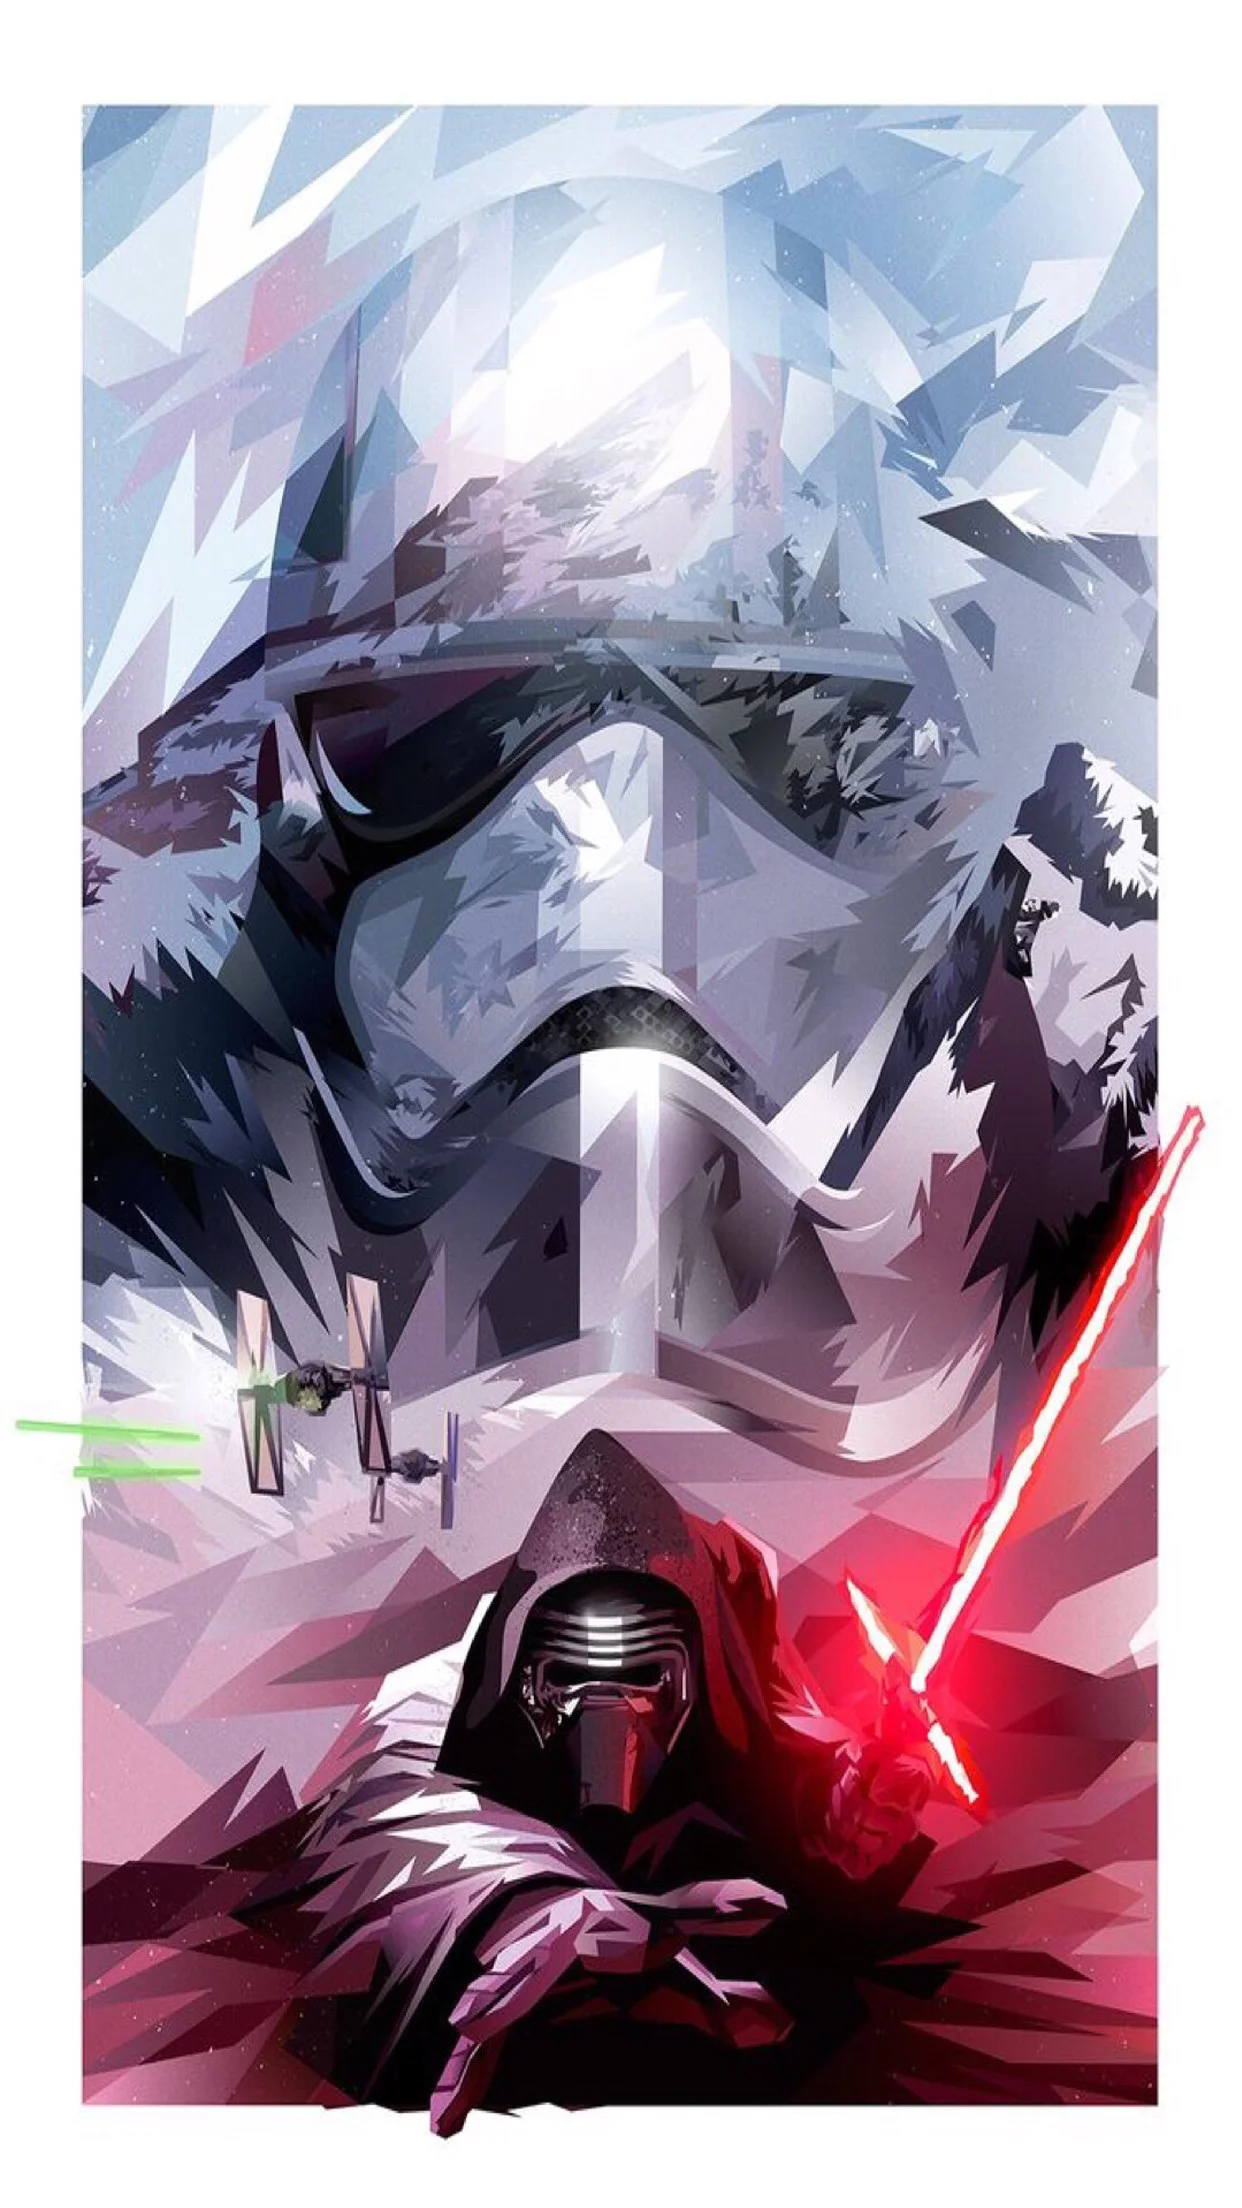 Star Wars The Force Awakens Dark Side splash Wallpaper iDeviceArt